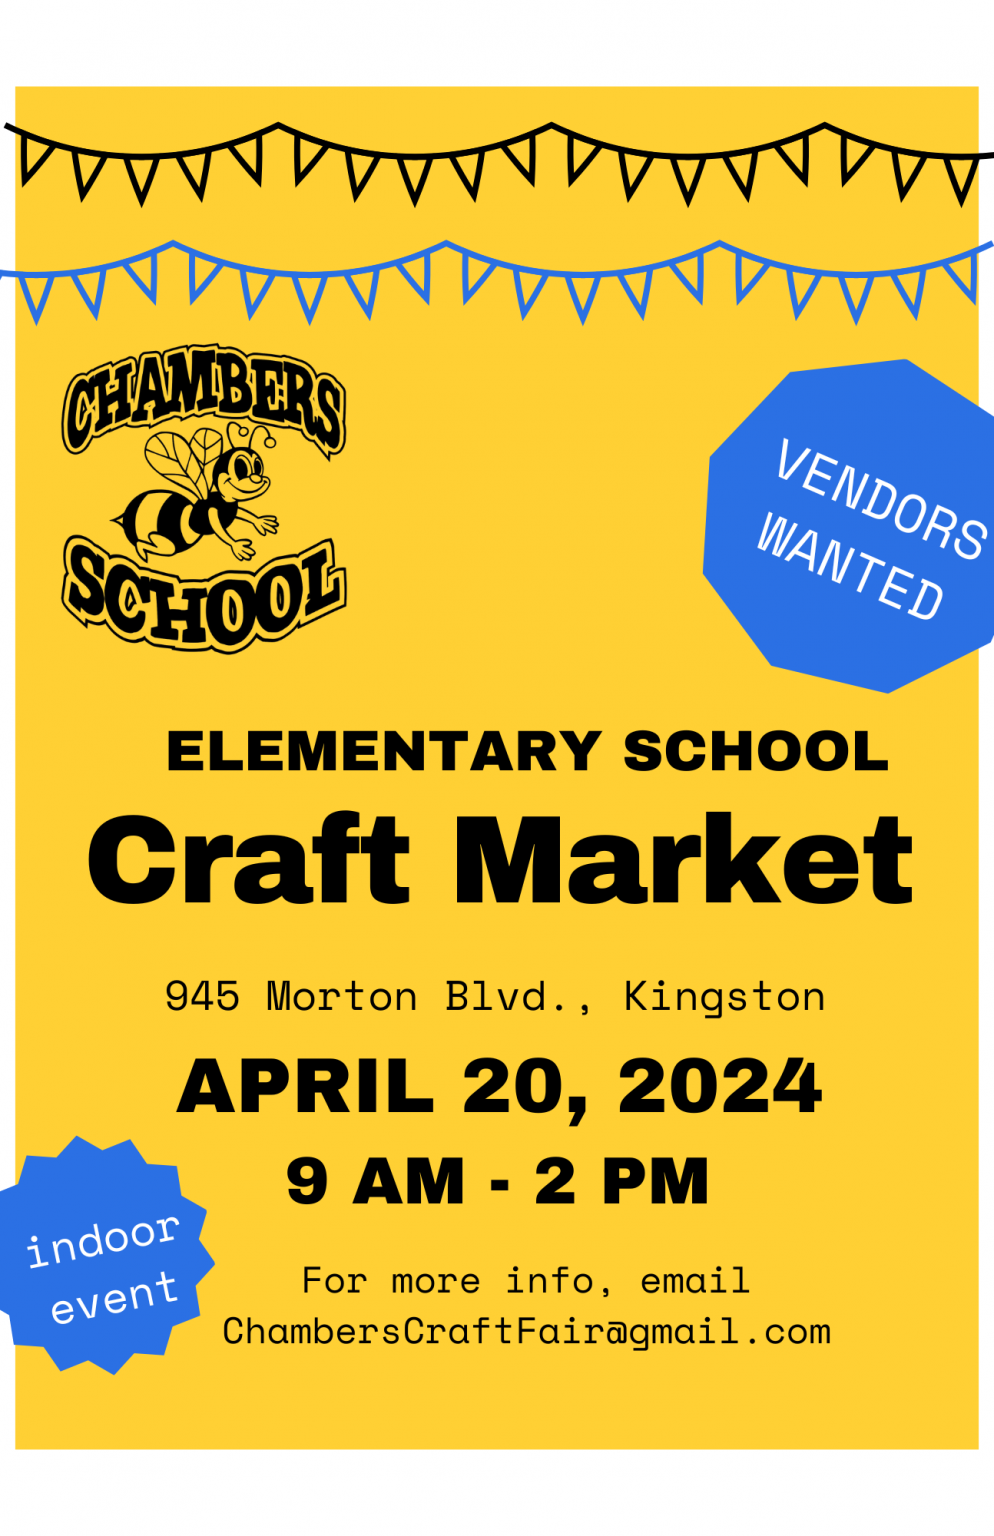 Chambers School Spring Craft Fair